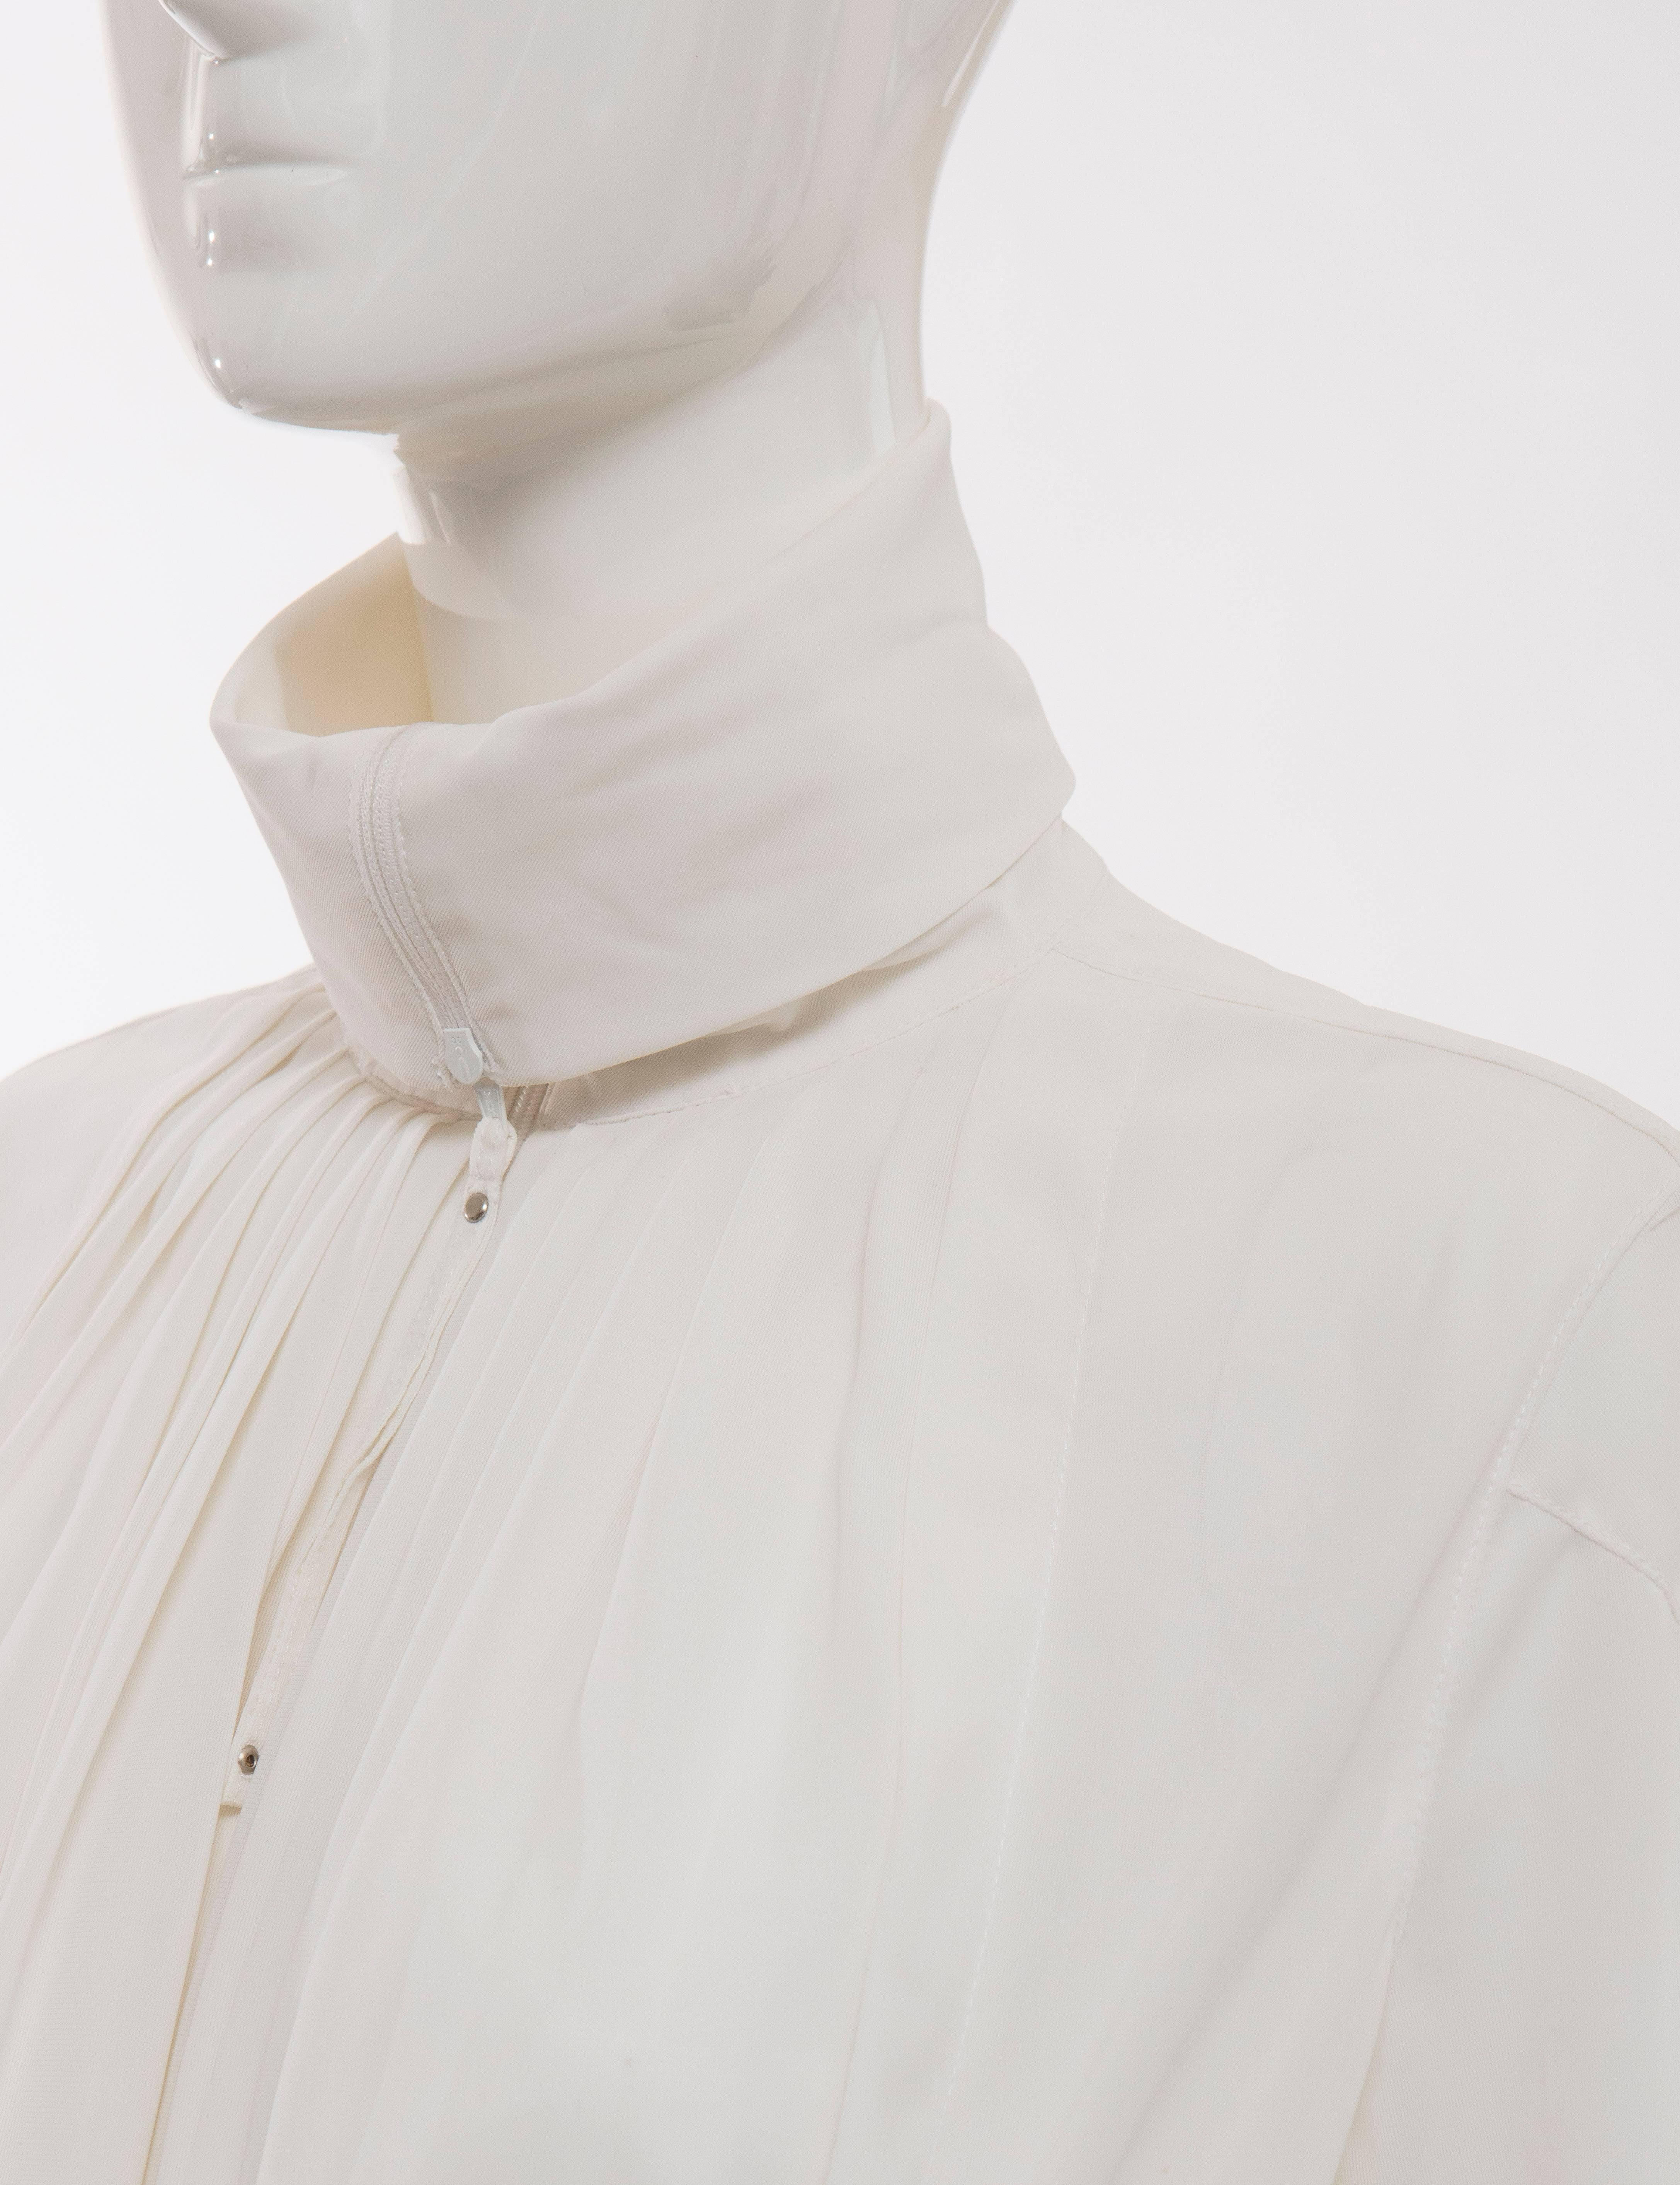 Jean Paul Gaultier White Nylon Zip Front Jacket, Circa 1990s For Sale 1